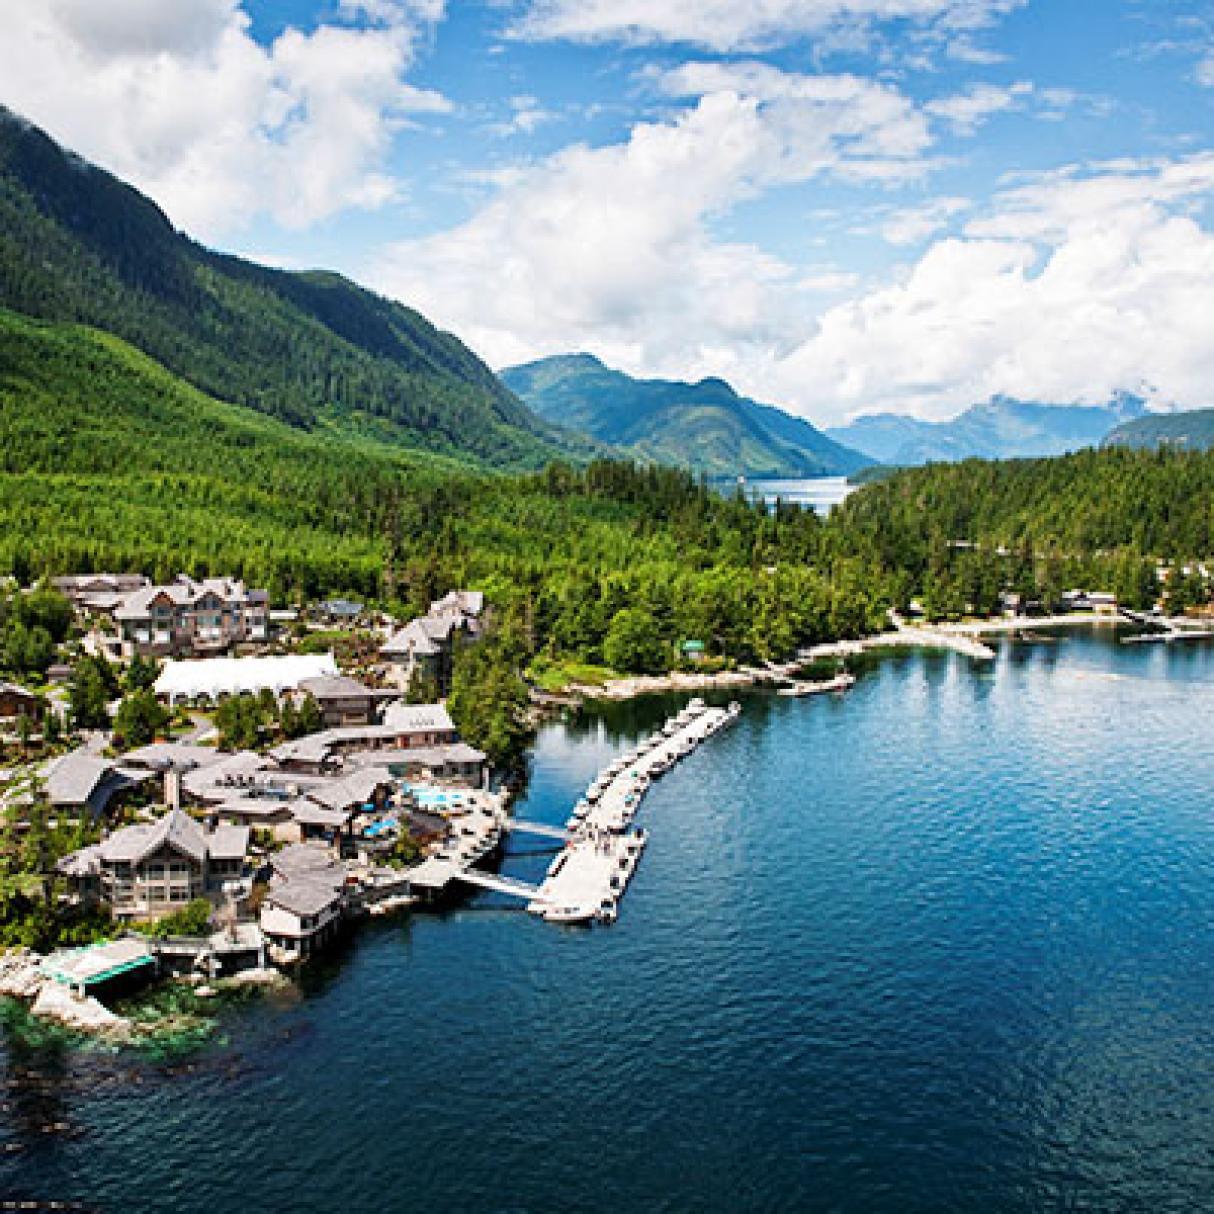 Aerial view of Sonora Resort in British Columbia